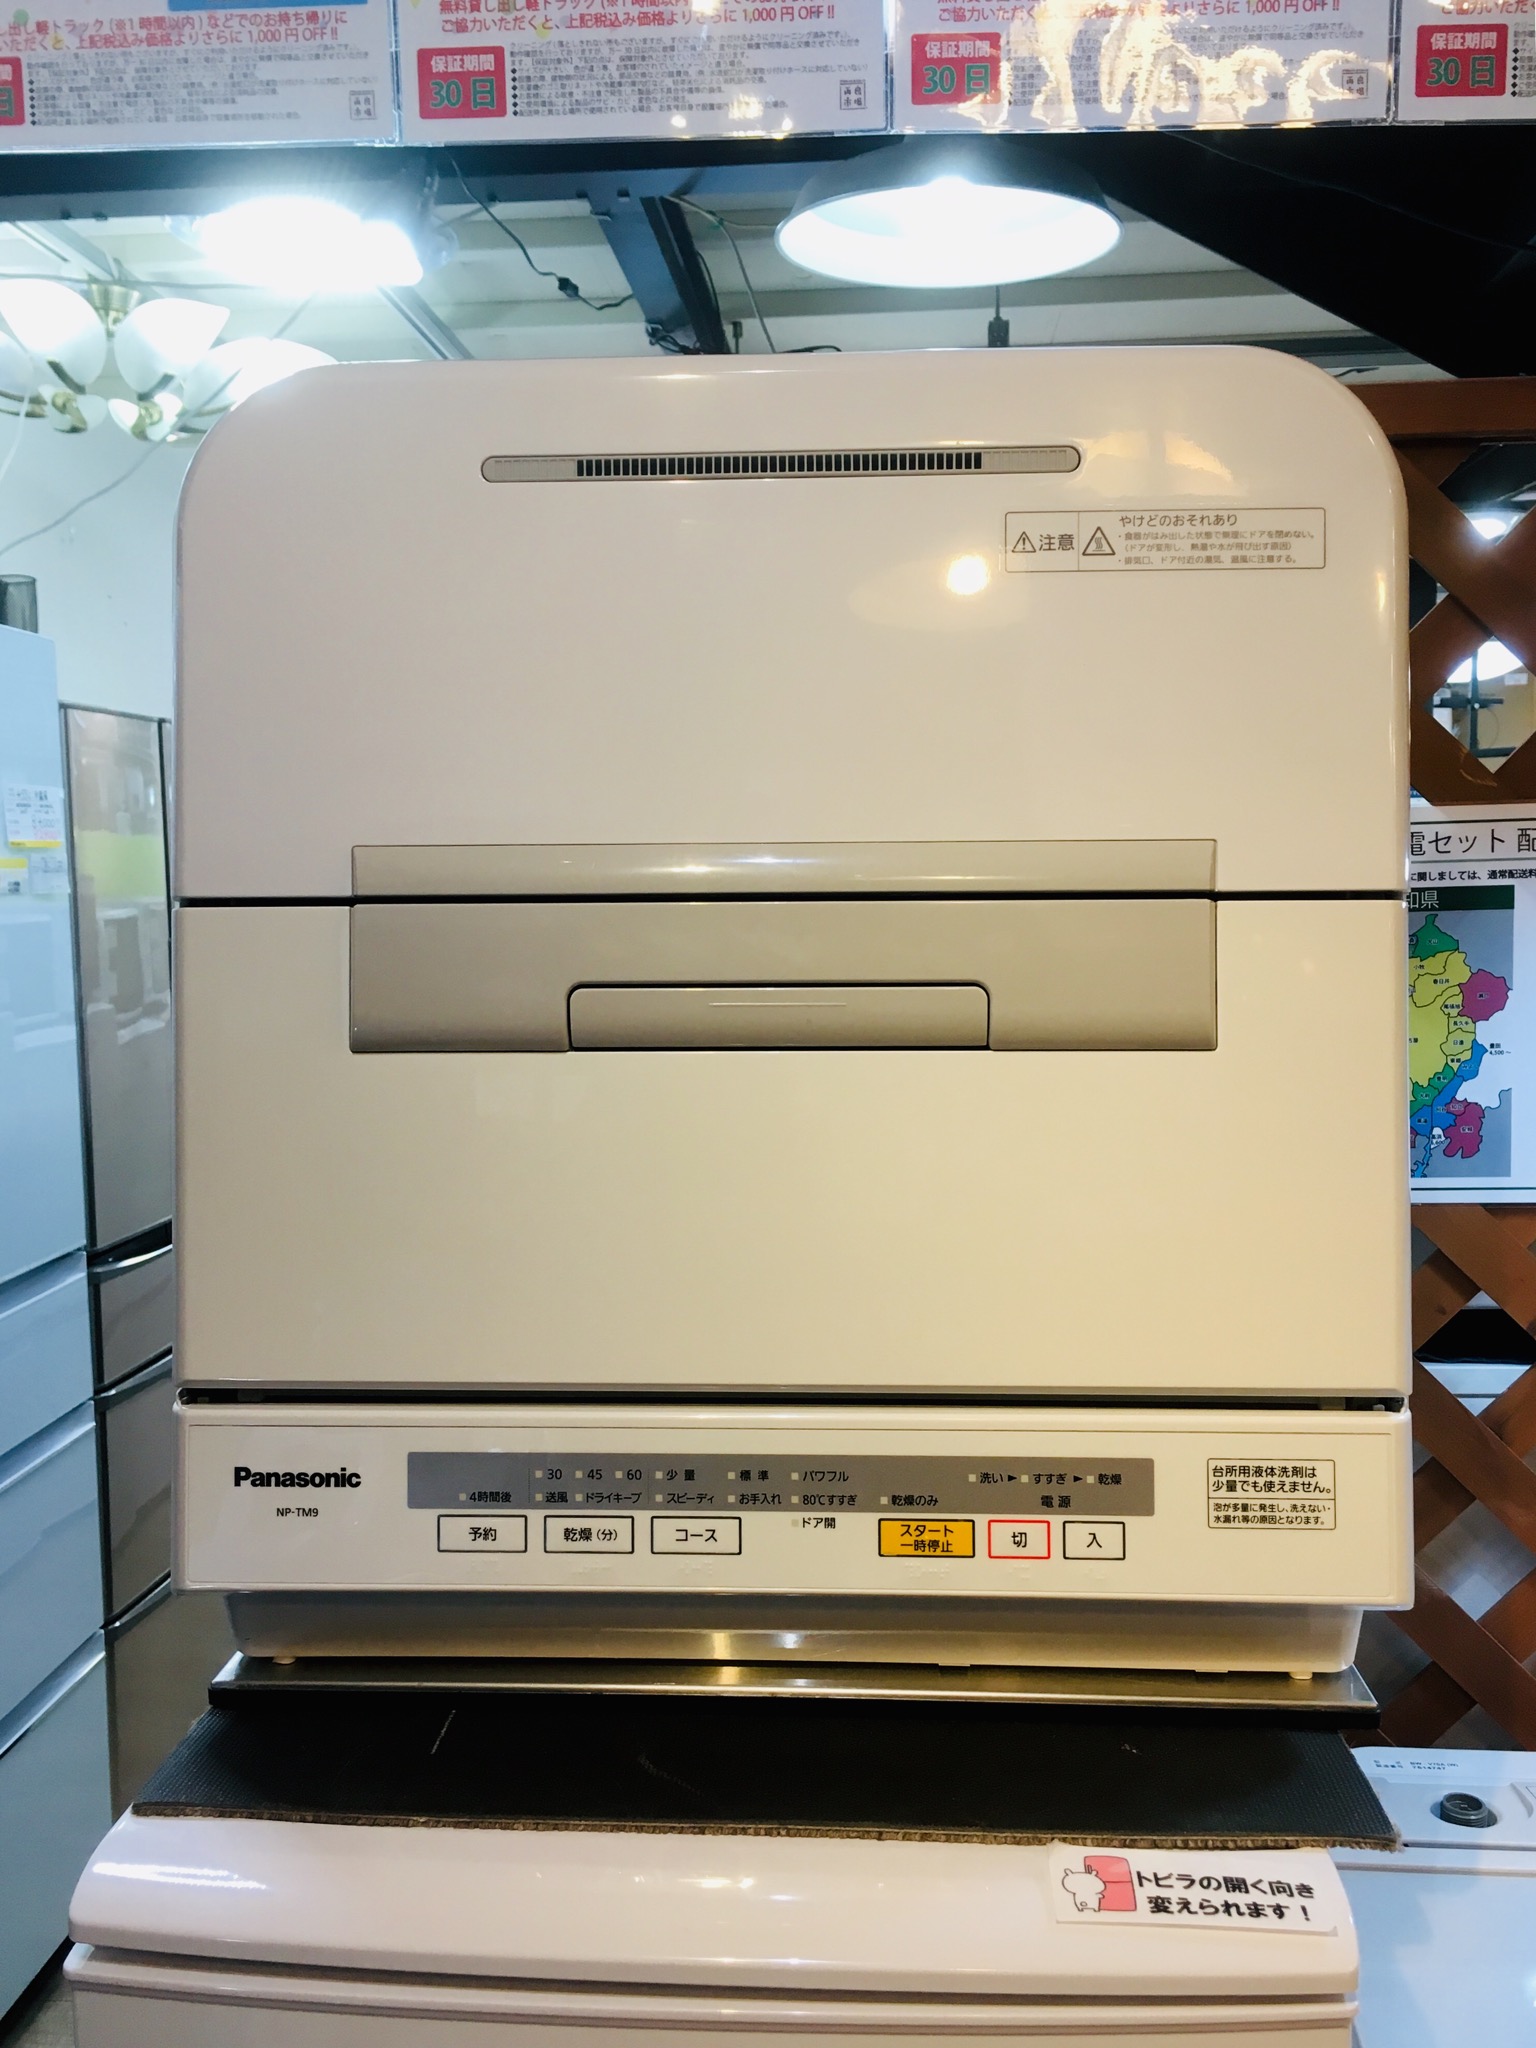 Panasonic＊食器洗い乾燥機（NP-TM9,2017年製）買取しました！ | 愛知と岐阜のリサイクルショップ 再良市場